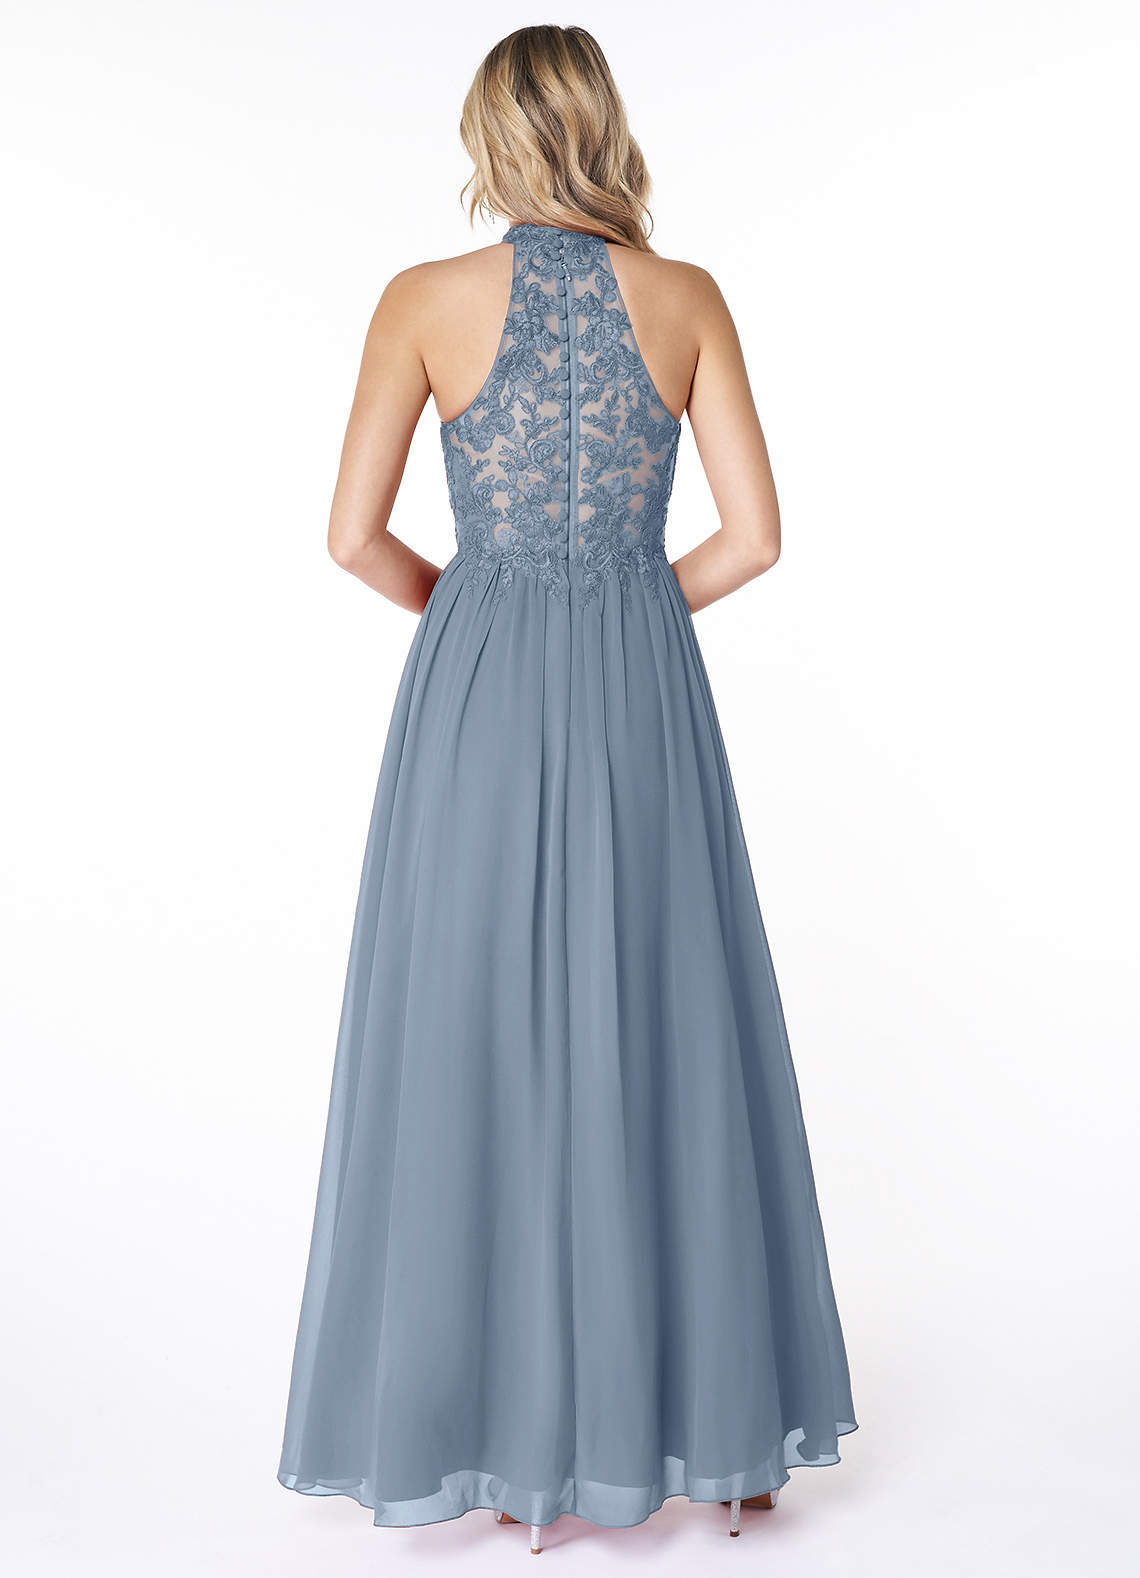 Azazie Prue Bridesmaid Dresses A-Line Lace Chiffon Floor-Length Dress image1